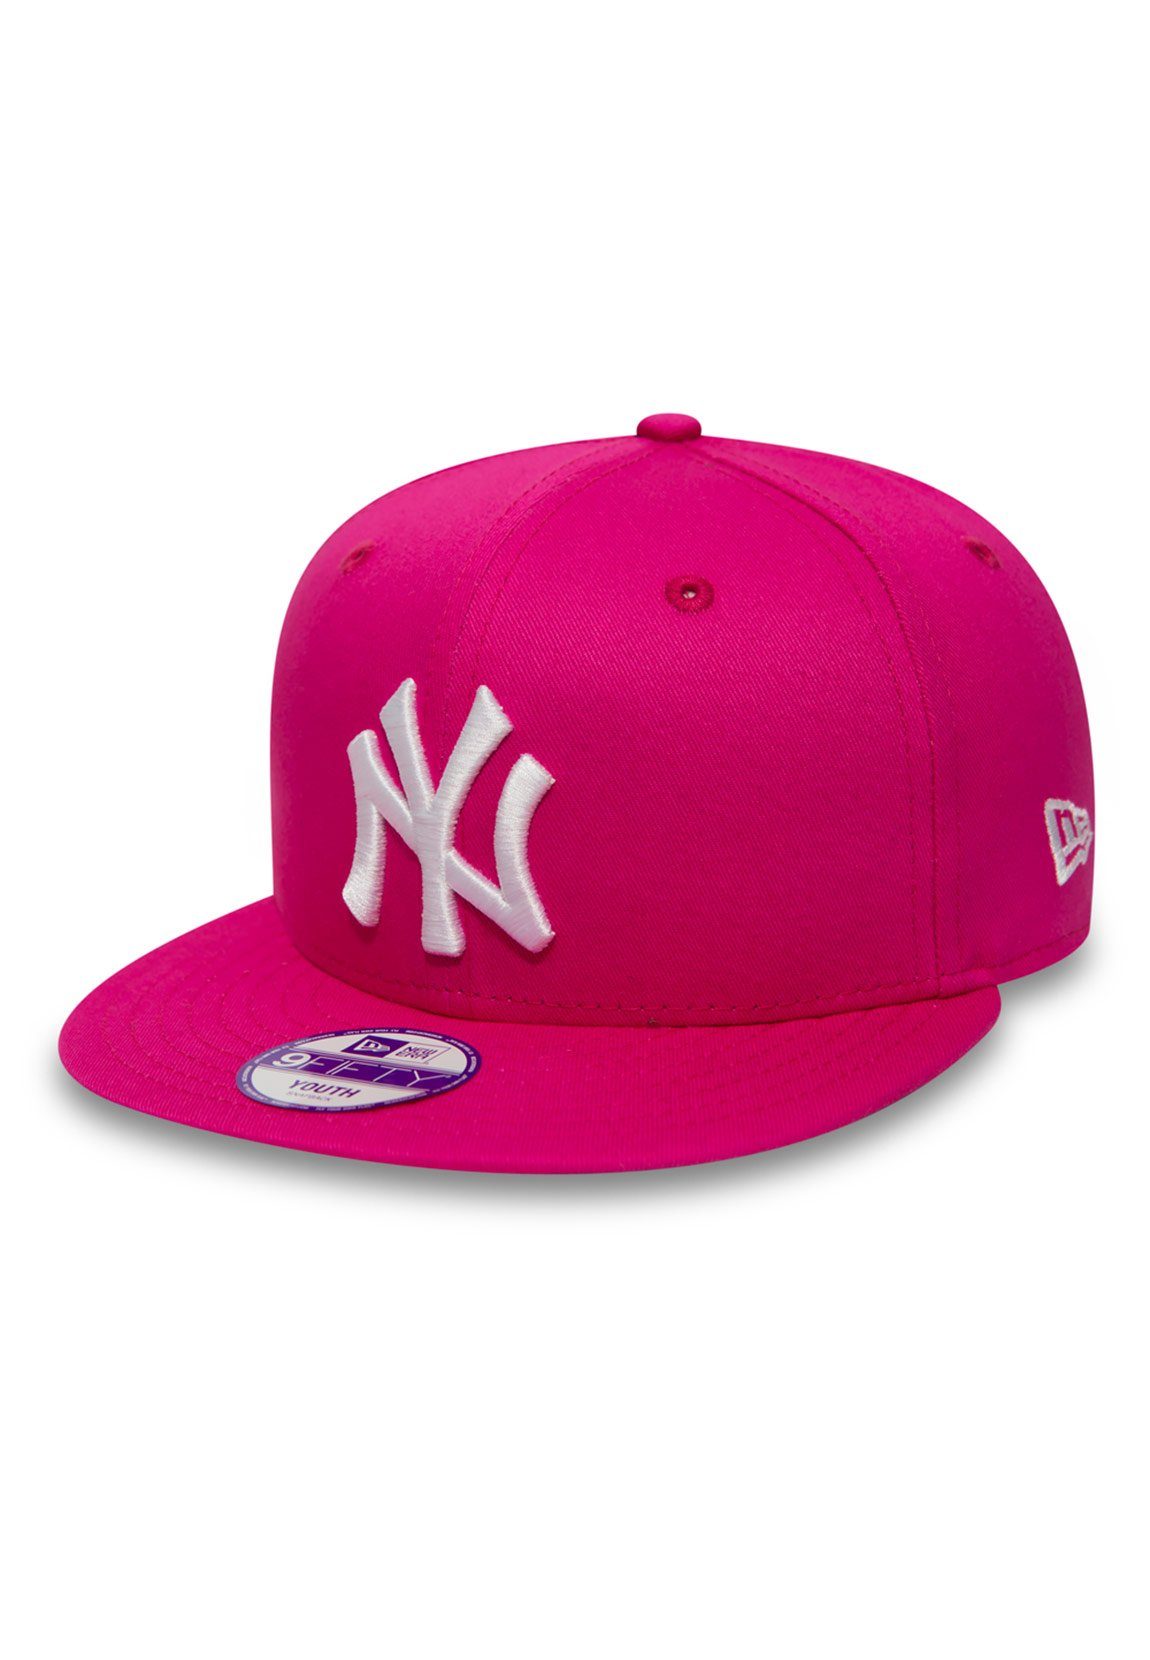 New Era Snapback YANKEES Snapback Hot - NY - Kids New Pink-White Era Cap